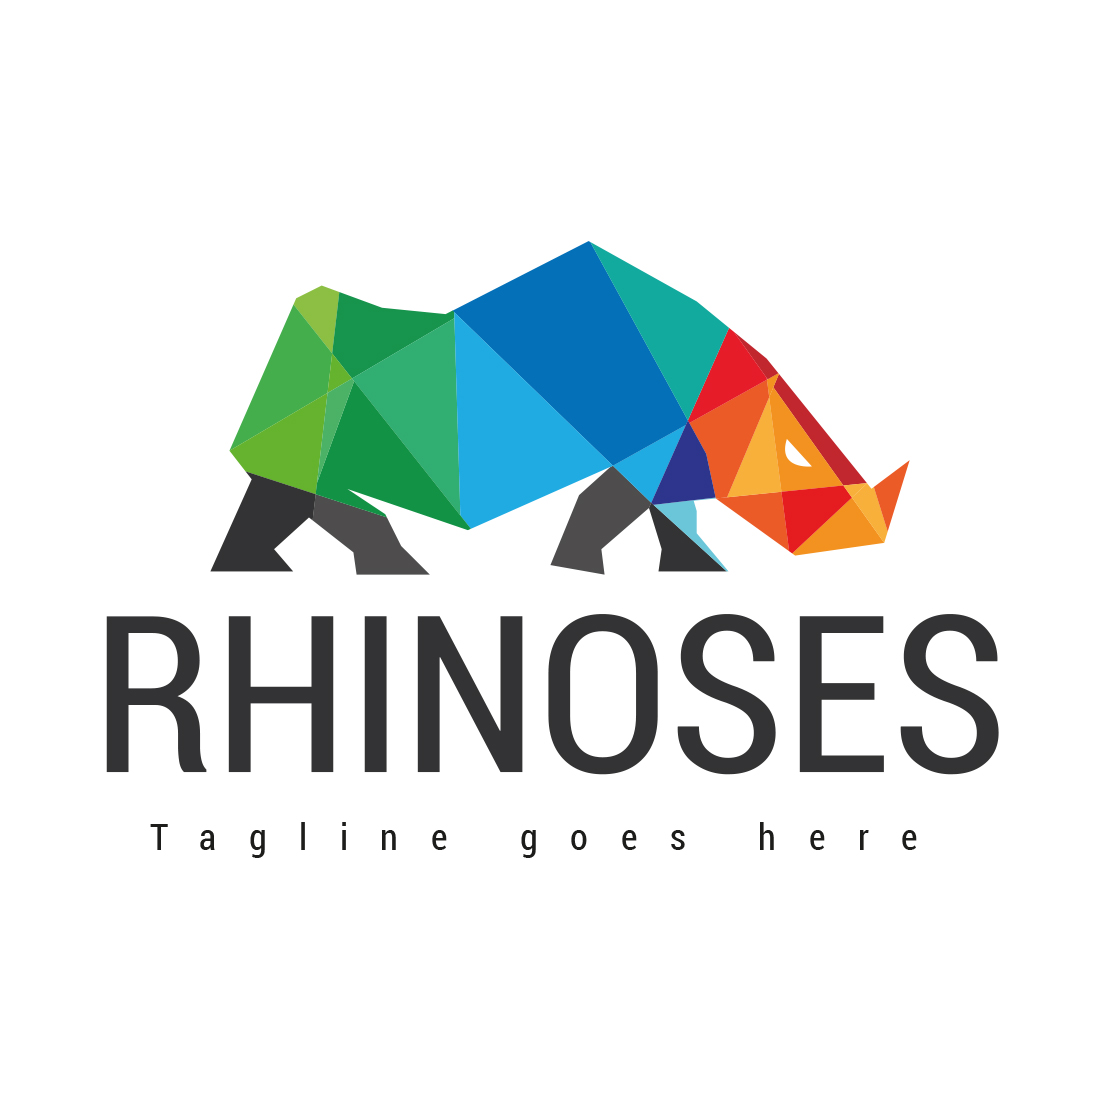 Rhinosorus geometrical logo design preview image.